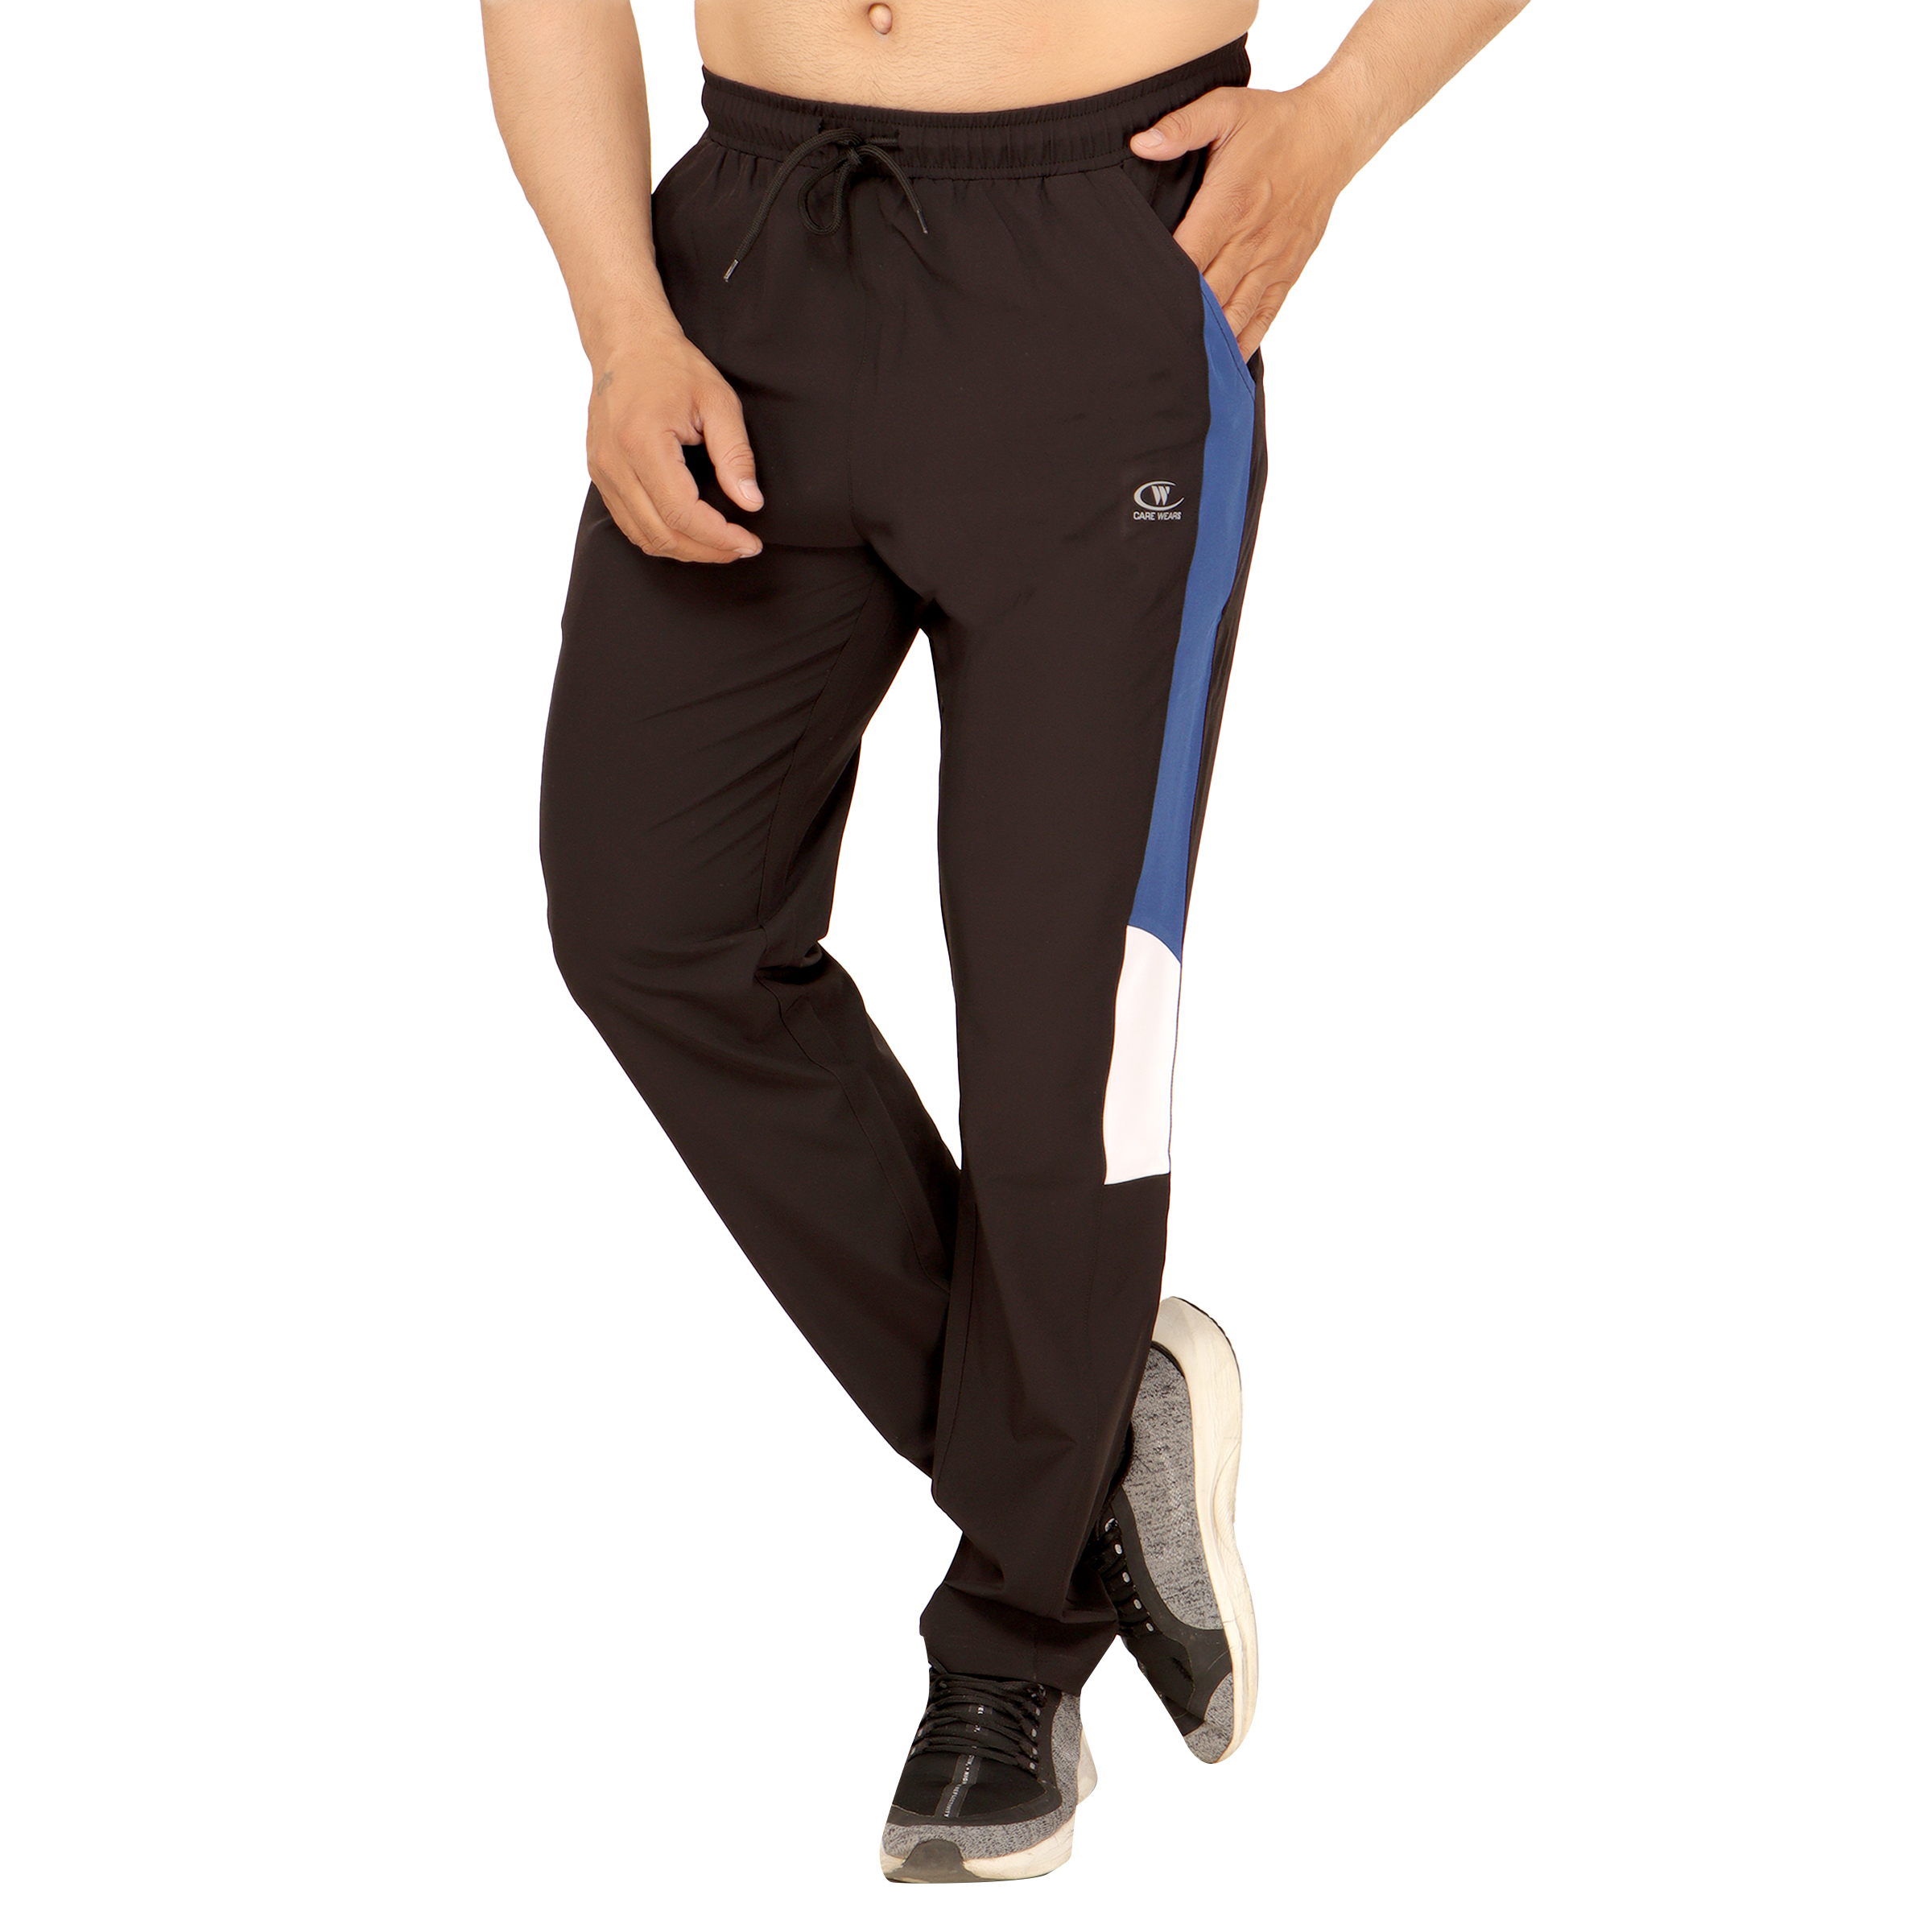 decathlon👖|Men Polyester Slim-Fit Gym Track Pants - Black  @decathlonsportindia - YouTube